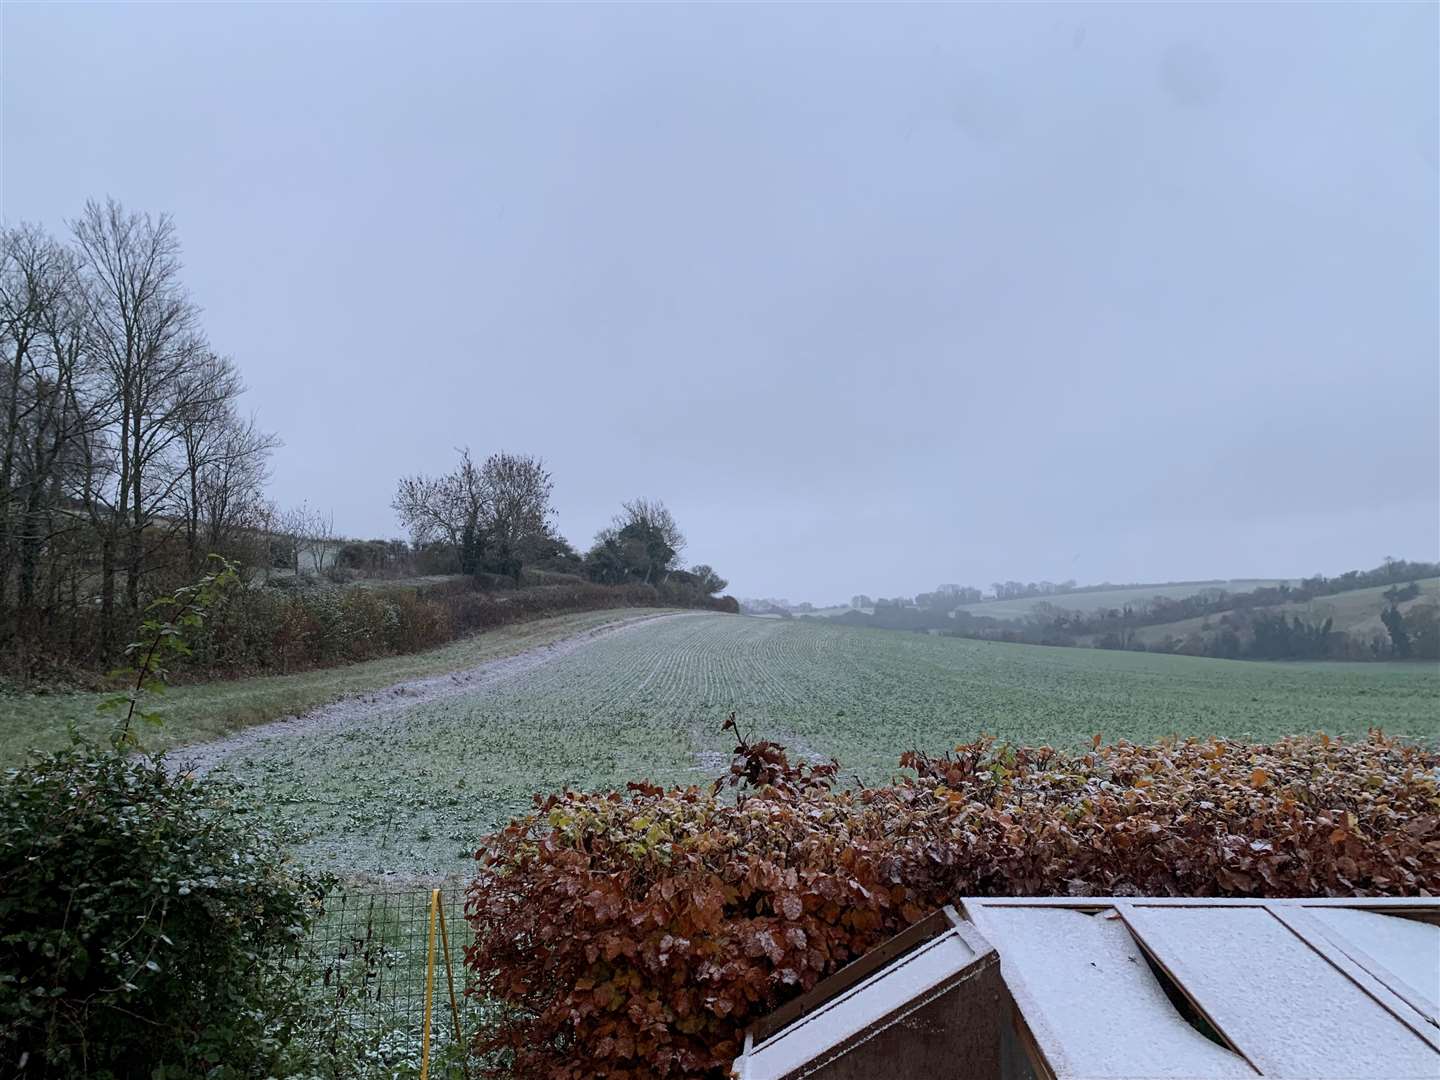 Snow in Hastingleigh, near Ashford